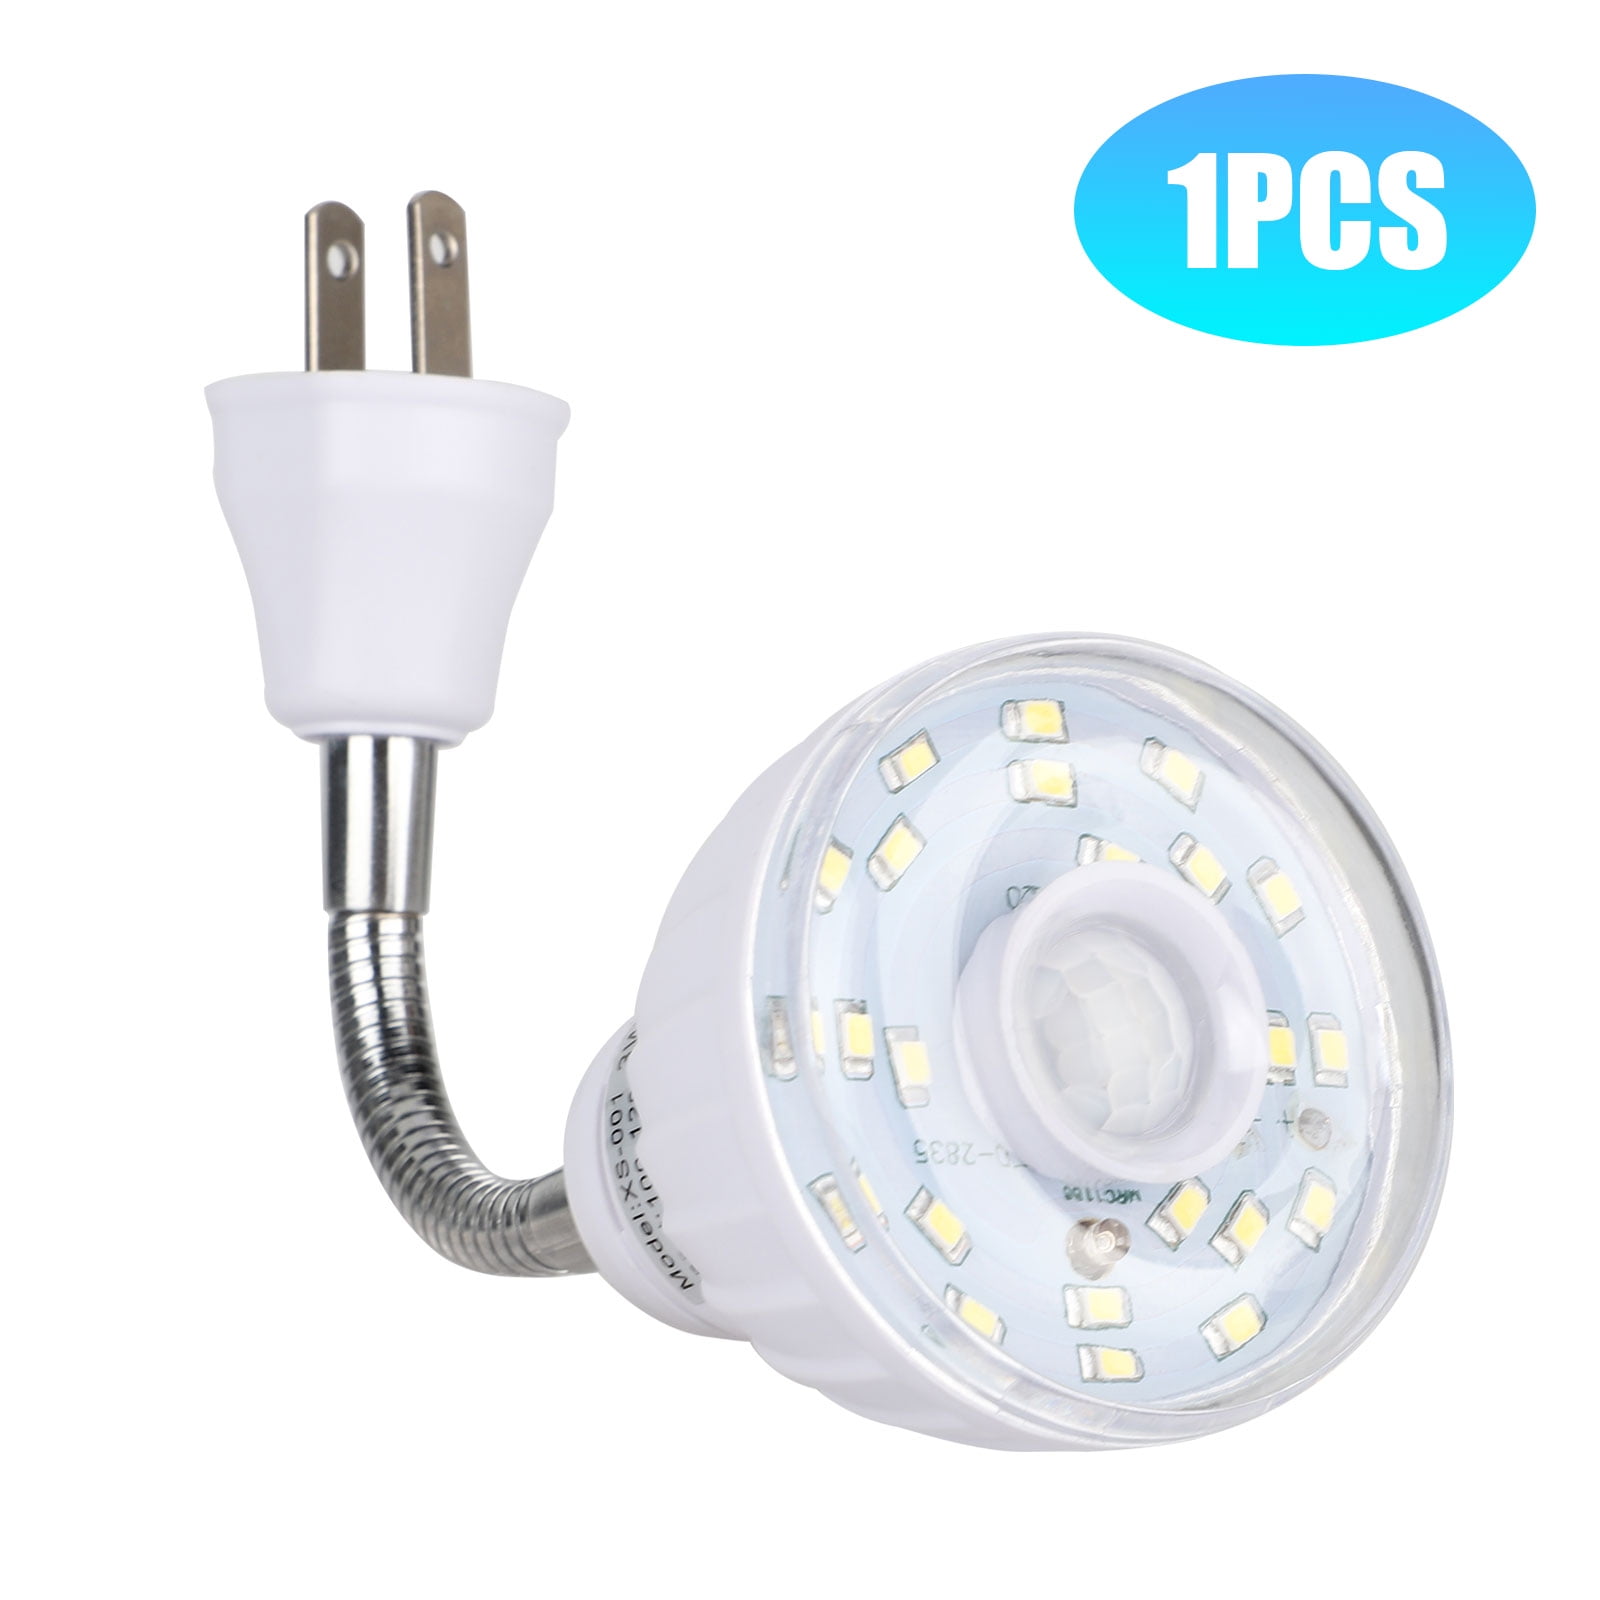 Plug-in Auto Sensor Control LED Night Light Lamp For Bedroom Hallway Star Shape 